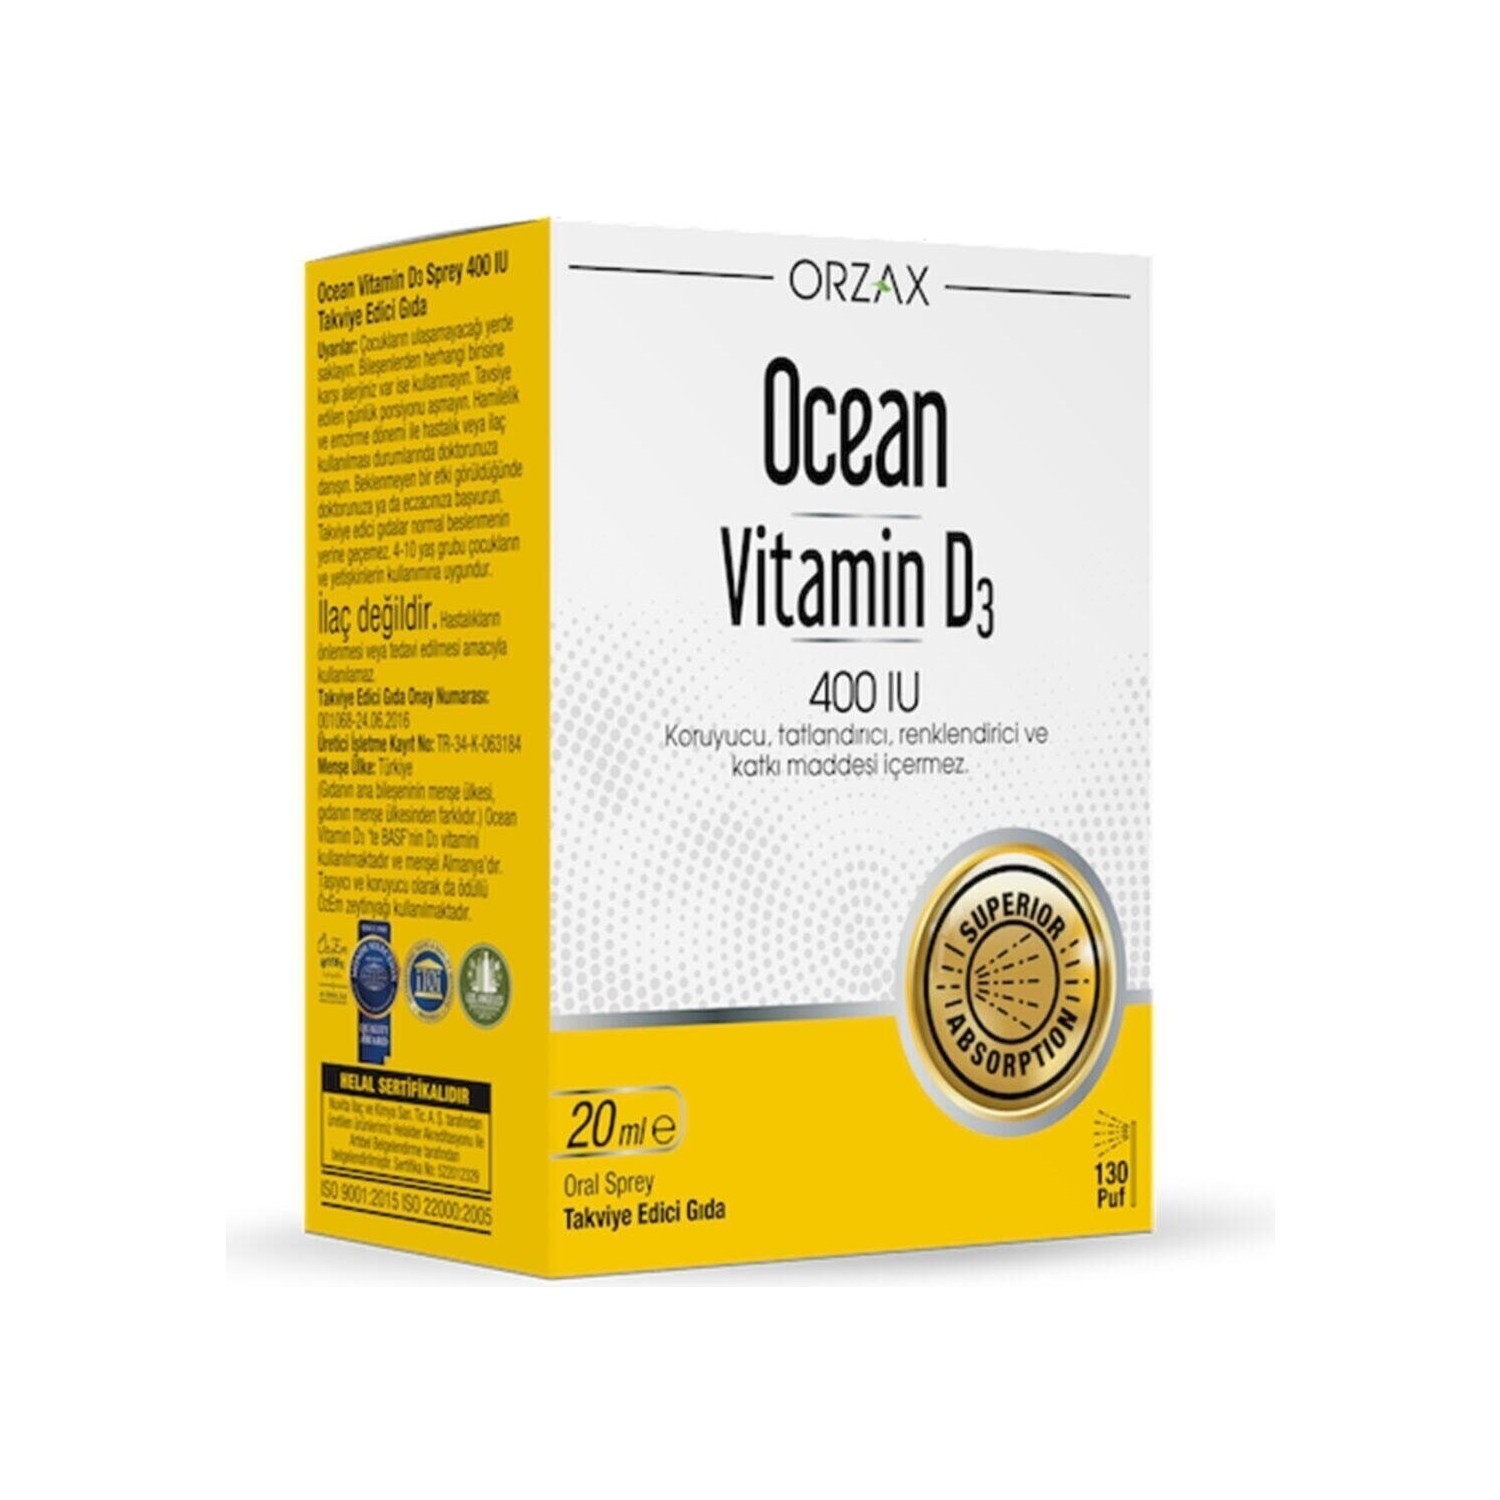 Спрей витамин D3 Ocean 400 ME, 20 мл ddrops baby 400 ме капли витамина d3 90 штук 3 шт в упаковке